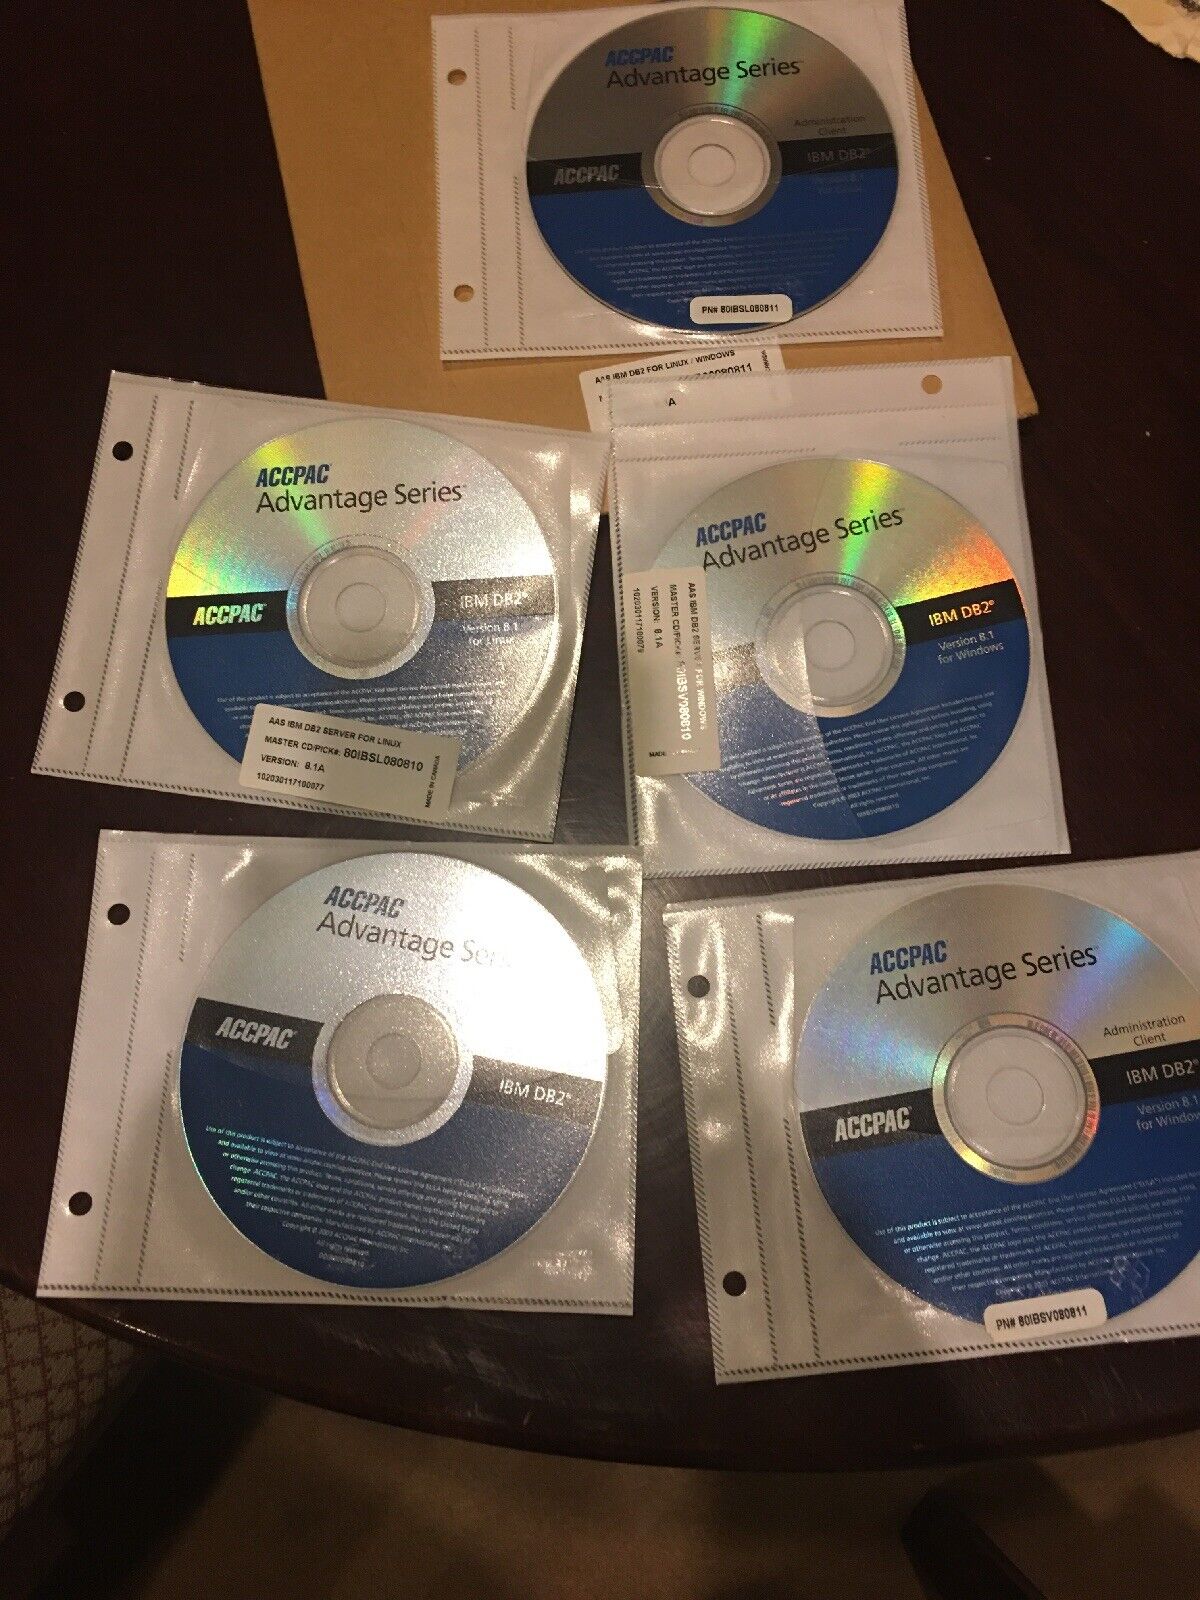 RARE Brand New ACCPAC Advantage Series for IBM DB2 Master CDs. Windows And Linux